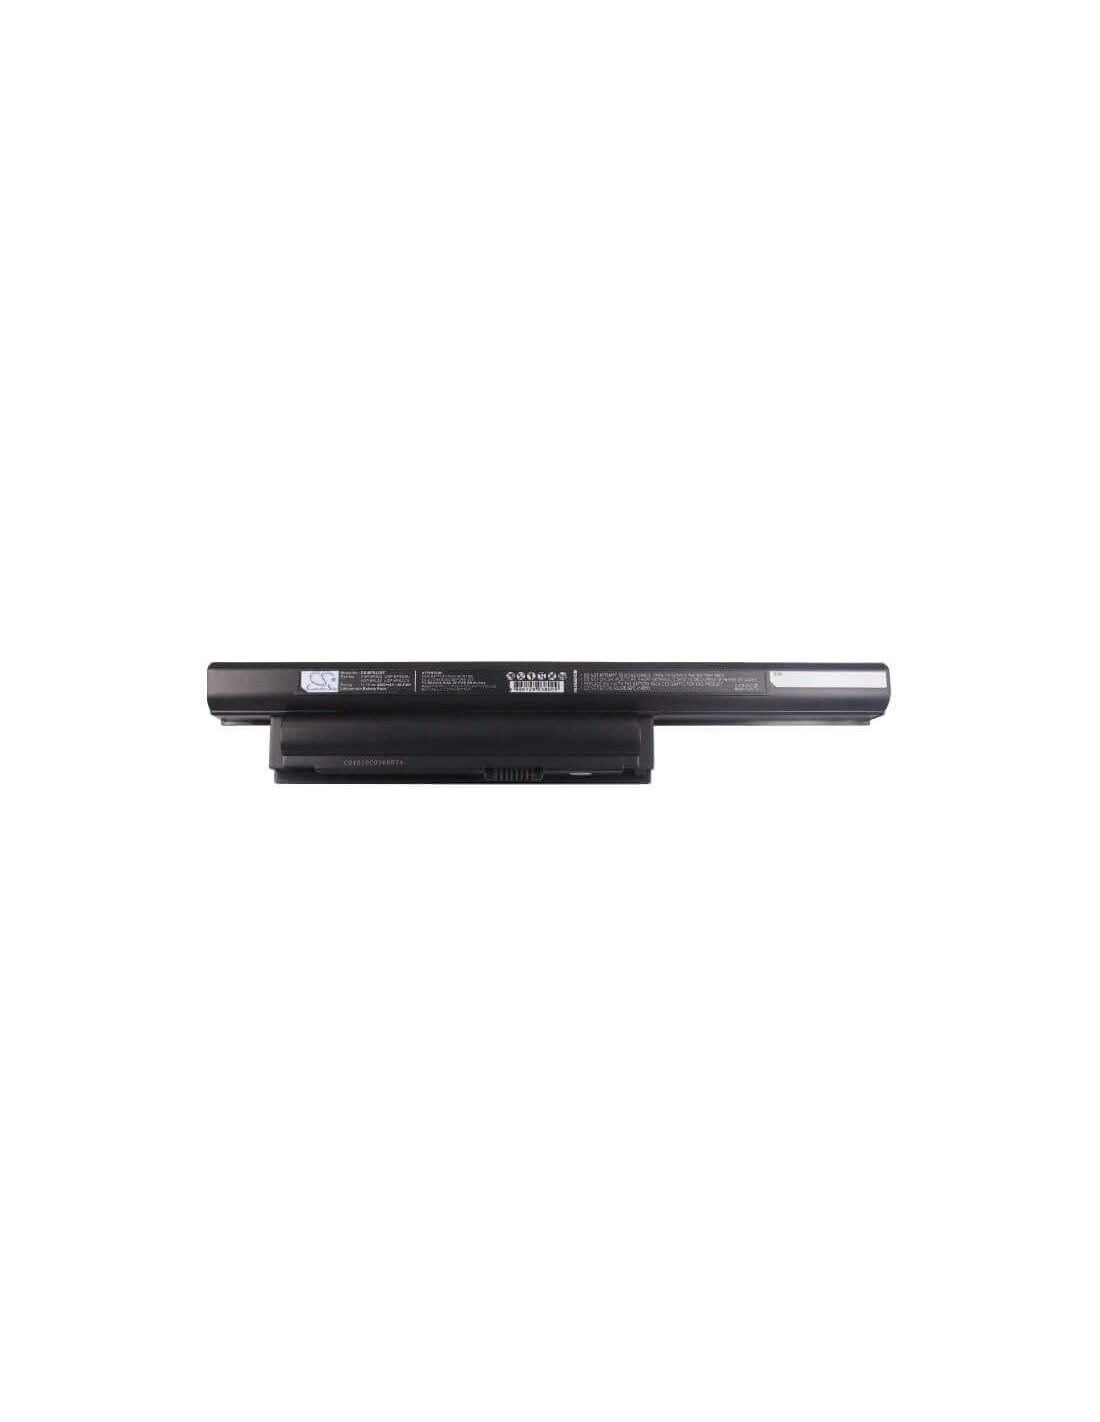 Black Battery for Sony Vaio Vpc-ea20, Vaio Vpc-eb10, Vaio Vpc-eb20 11.1V, 4400mAh - 48.84Wh